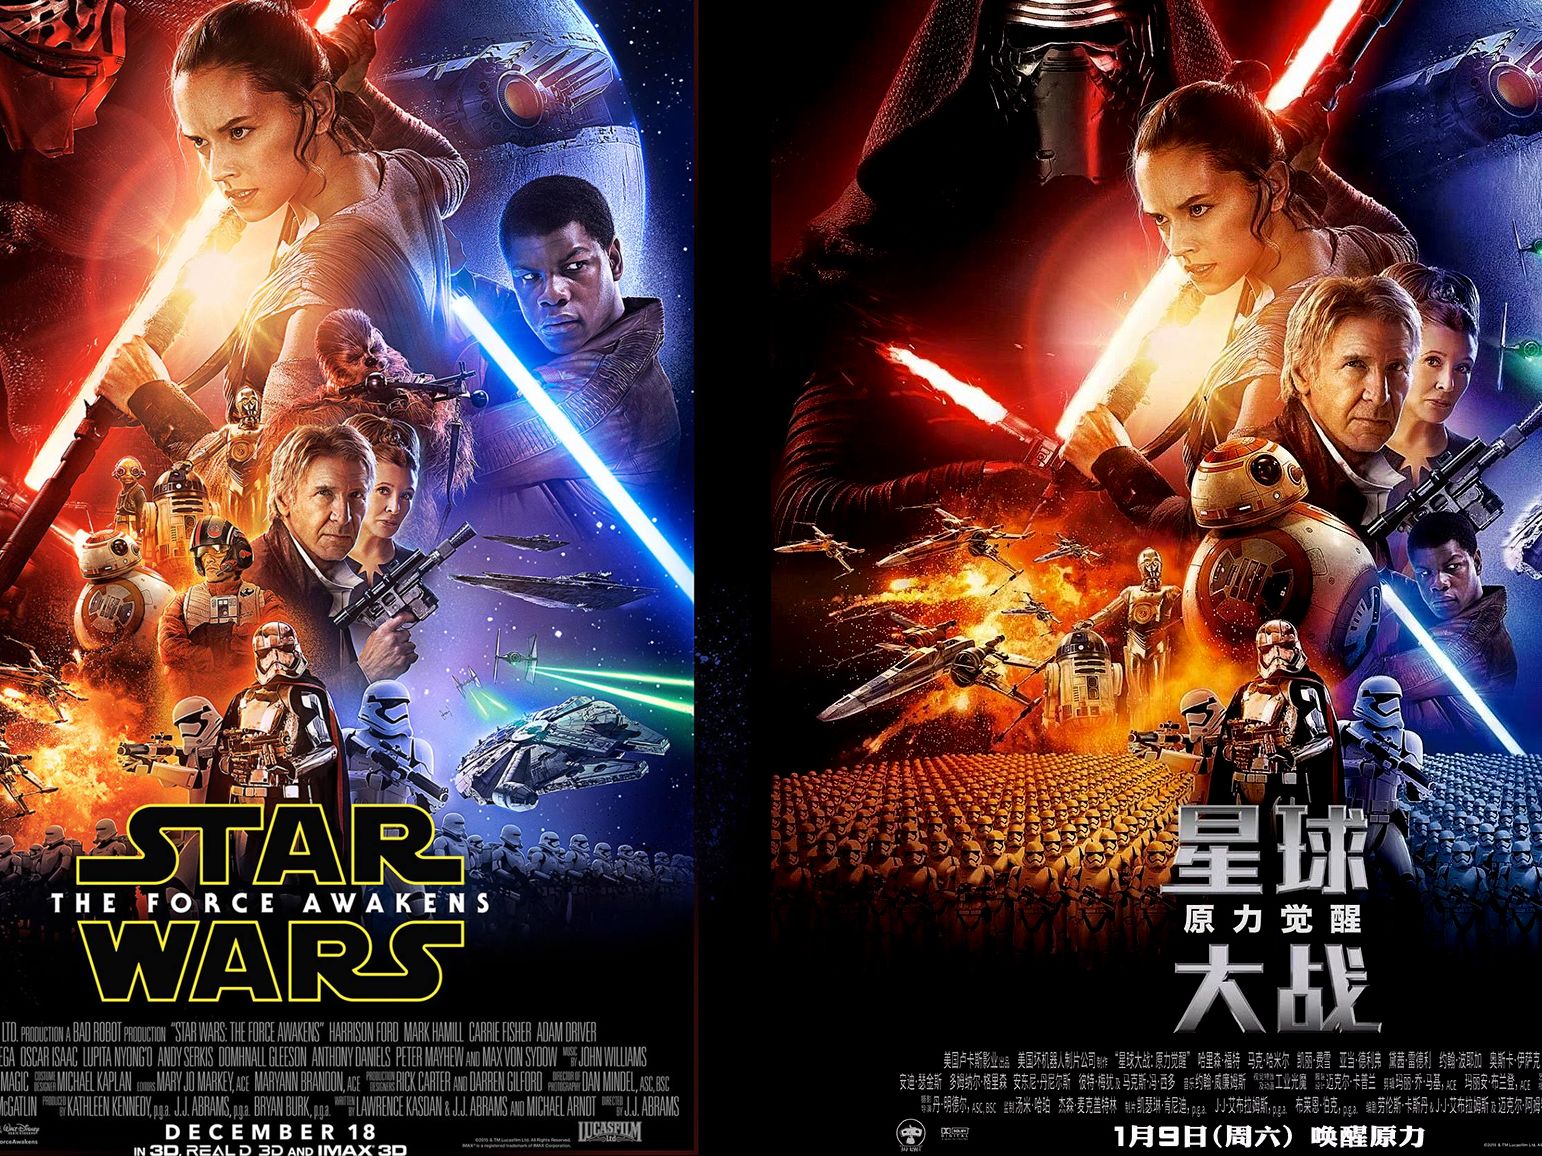 chirurg markeerstift Verhuizer Star Wars: The Force Awakens' China poster 'racist' | CNN